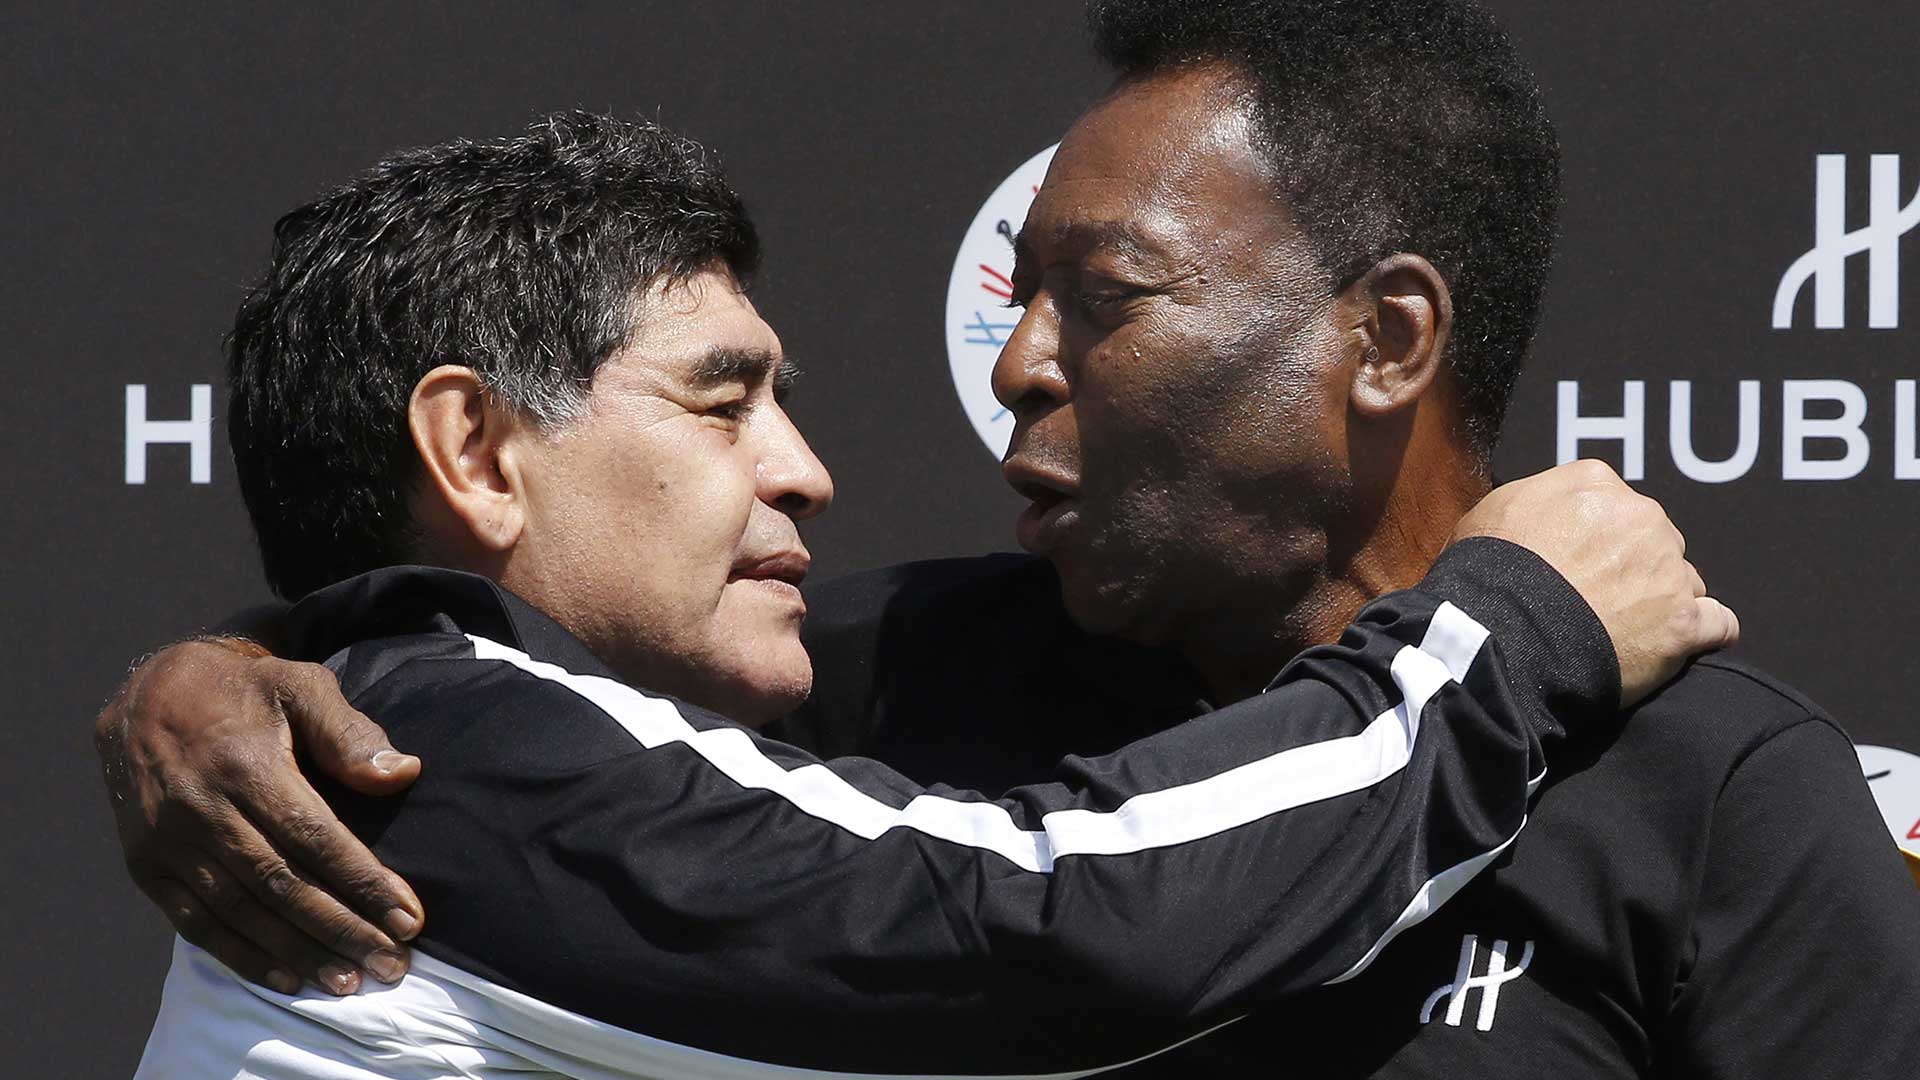 La despedida de Pelé a Maradona: "Un día, espero que podamos jugar juntos a la pelota en el cielo" | Goal.com